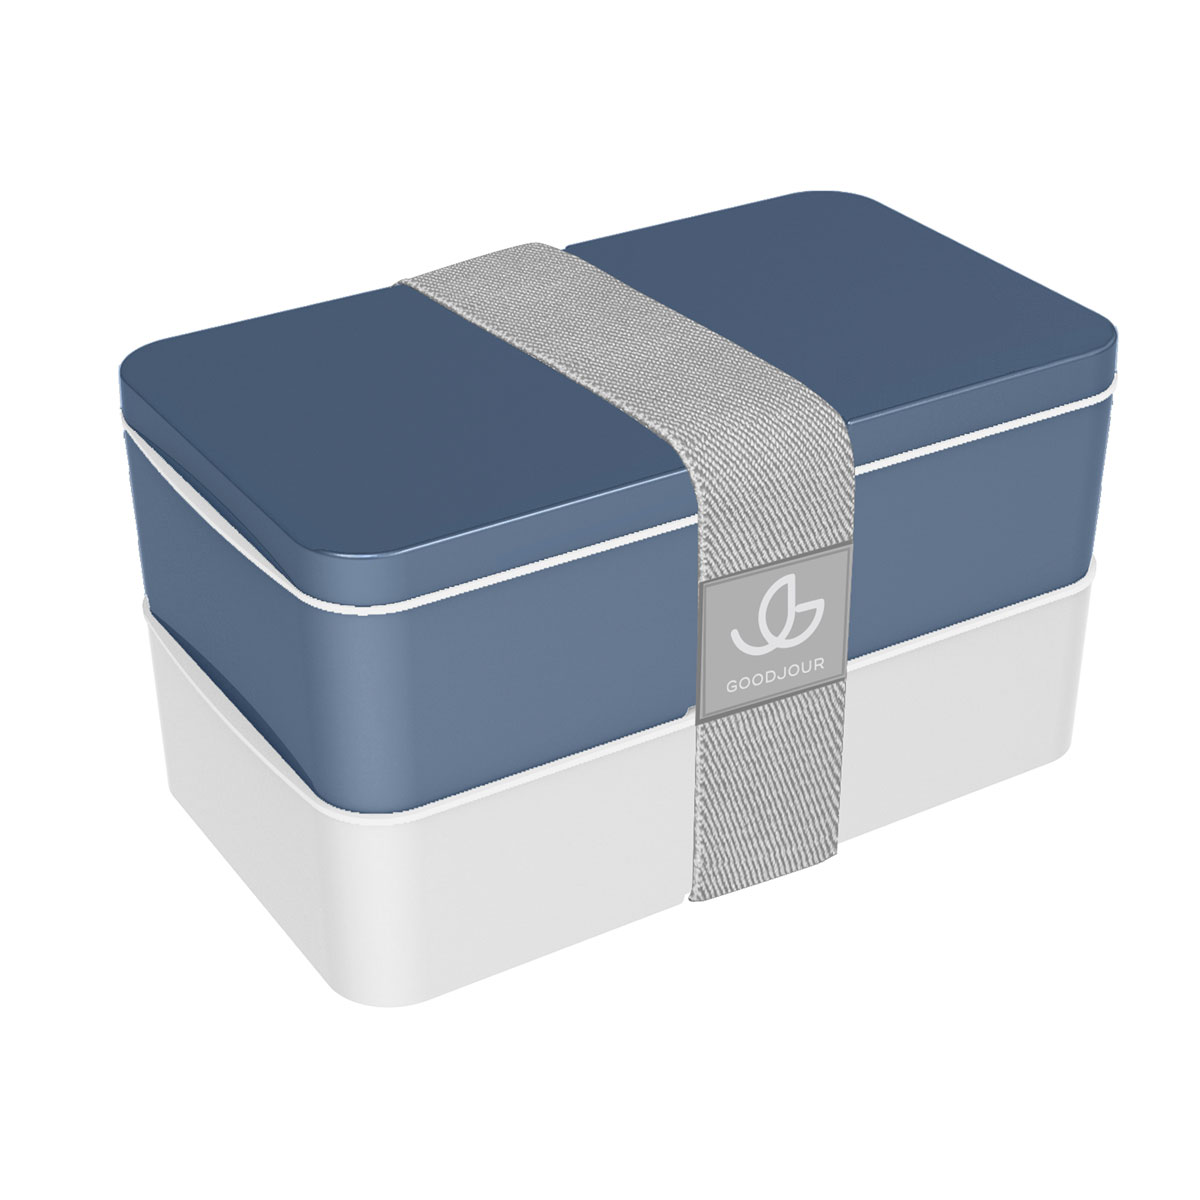 Lunch-box-GJ003-bleu-et-blanc